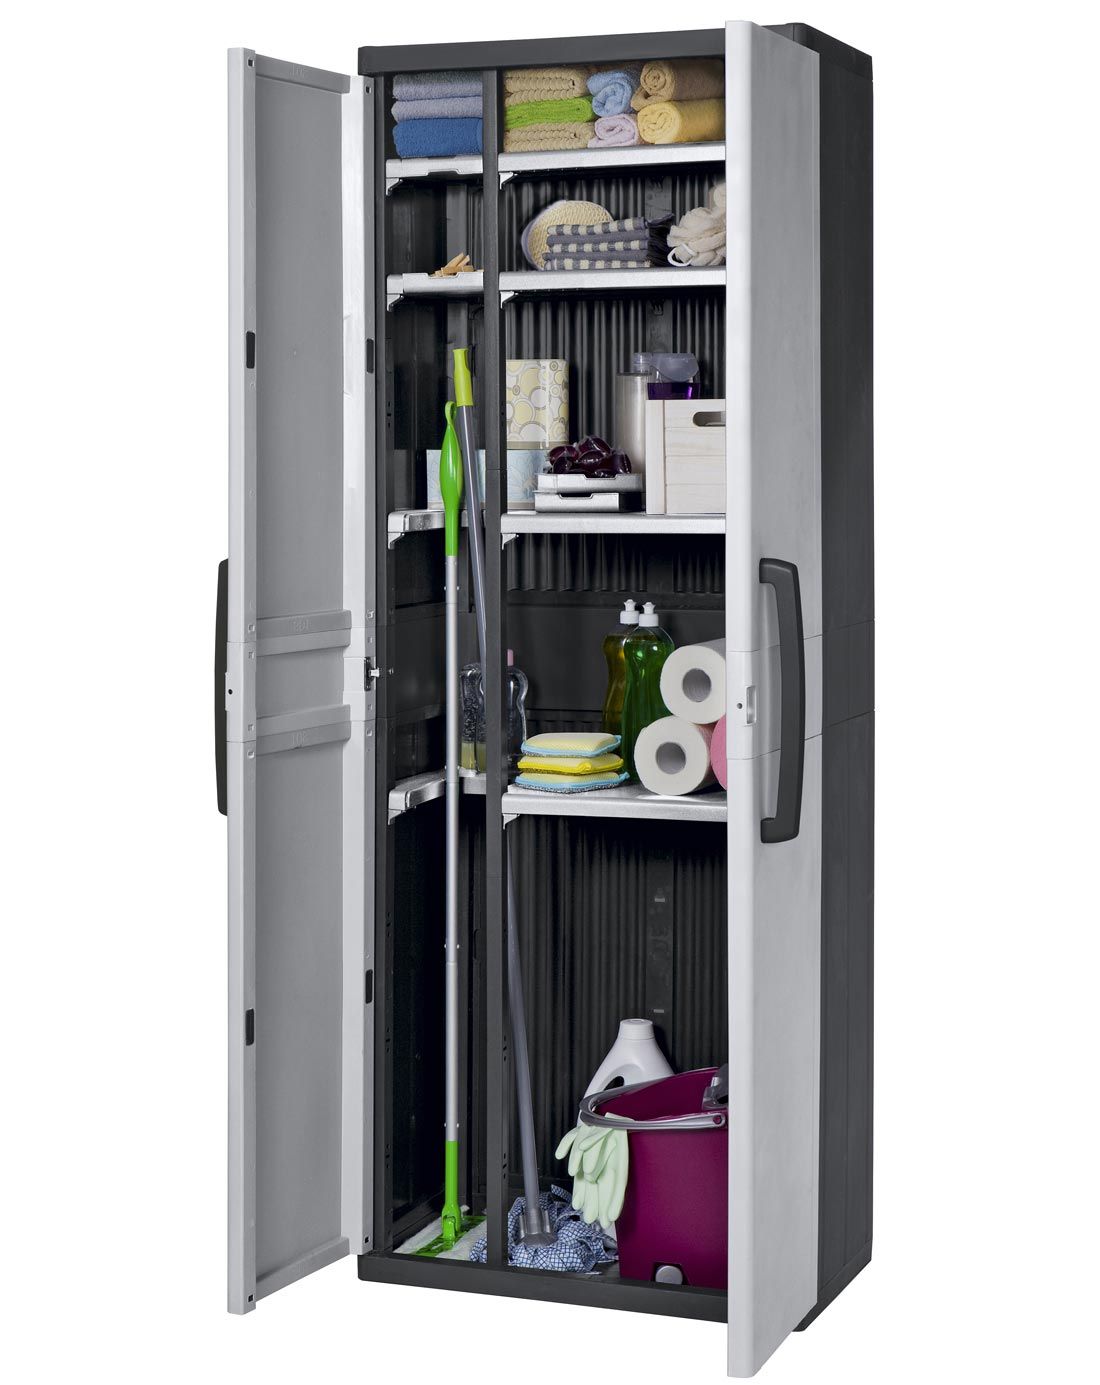 SpaceRite Series Utility Cabinet